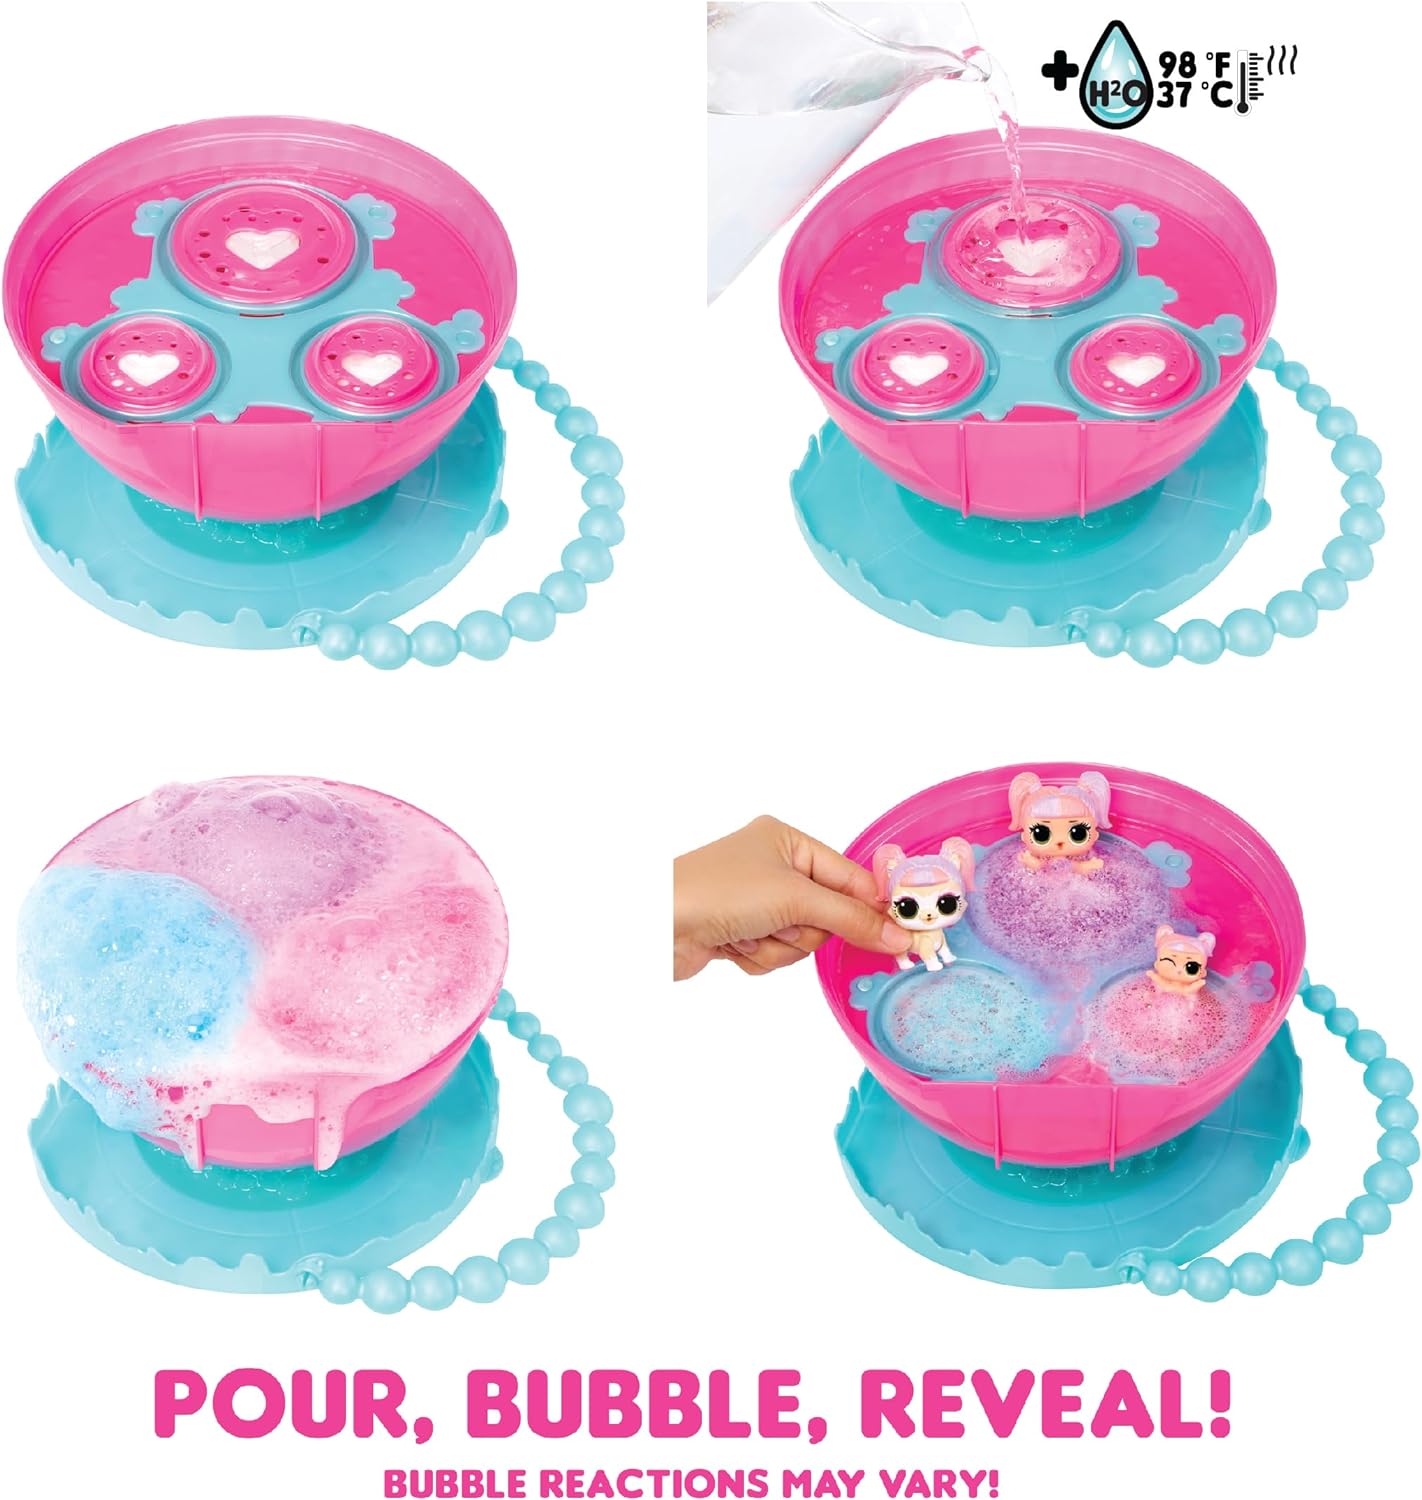 L.O.L. Surprise! Bubble Surprise Deluxe - Collectible Dolls, Pet, Baby Sister, Surprises, Accessories, Unboxing, Color-Change Foam Reaction - Great Gift for Girls Age 4+